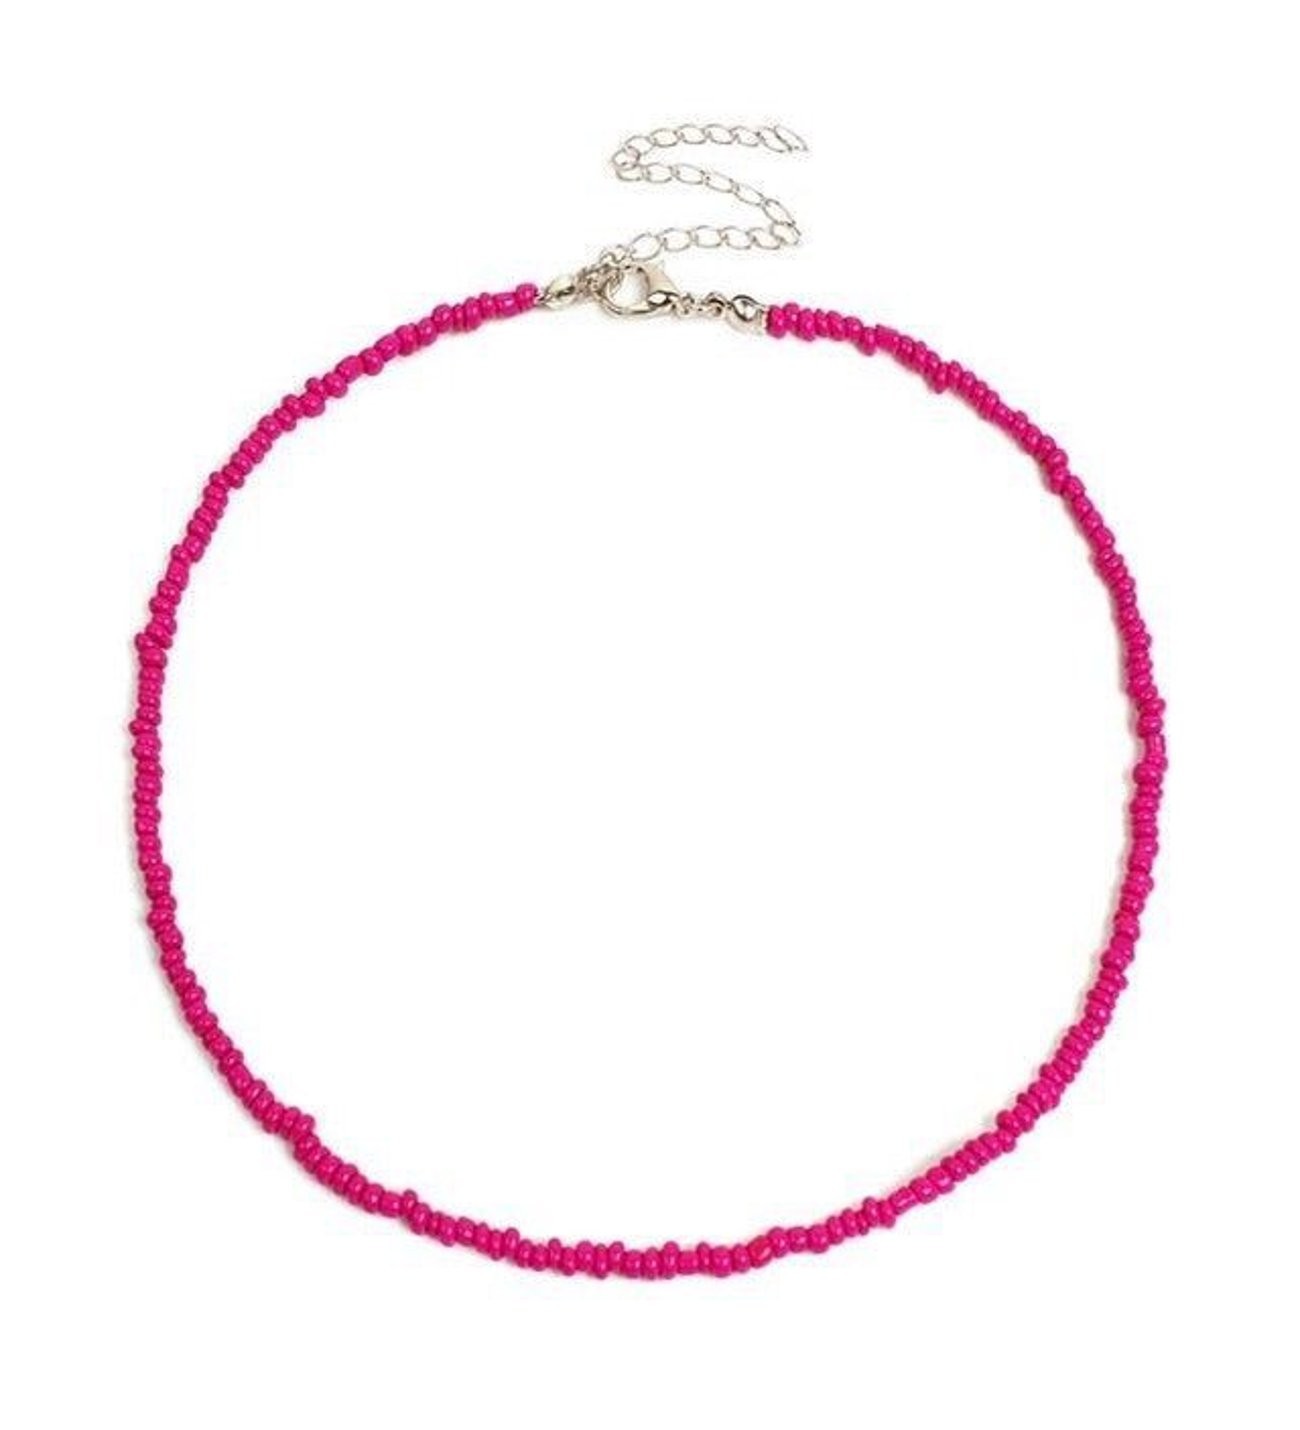 Fuchsia color bead necklace